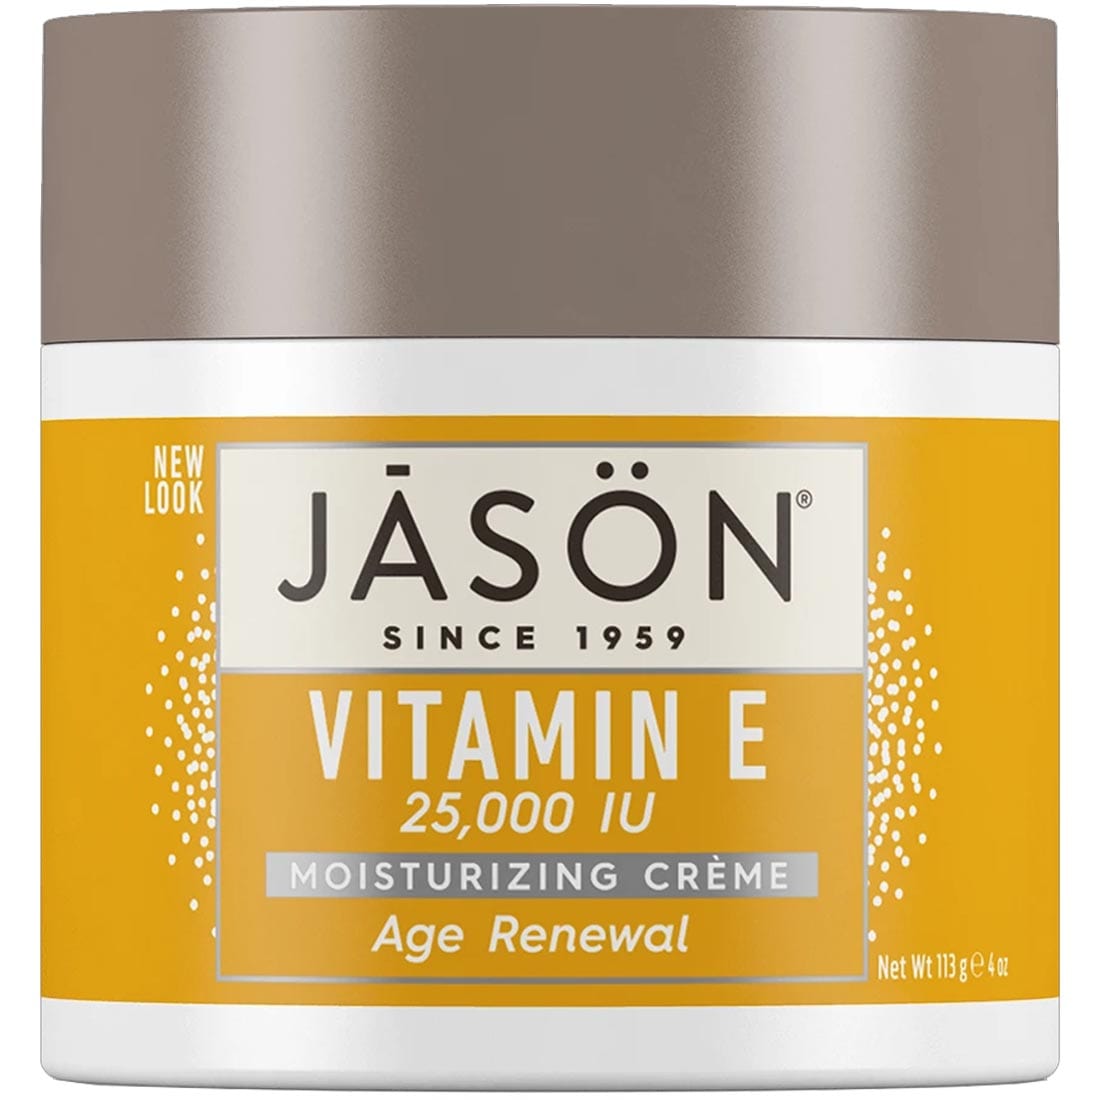 Jason Vitamin E 25,000 IU Age Renewal Moisturizing Creme, 113g